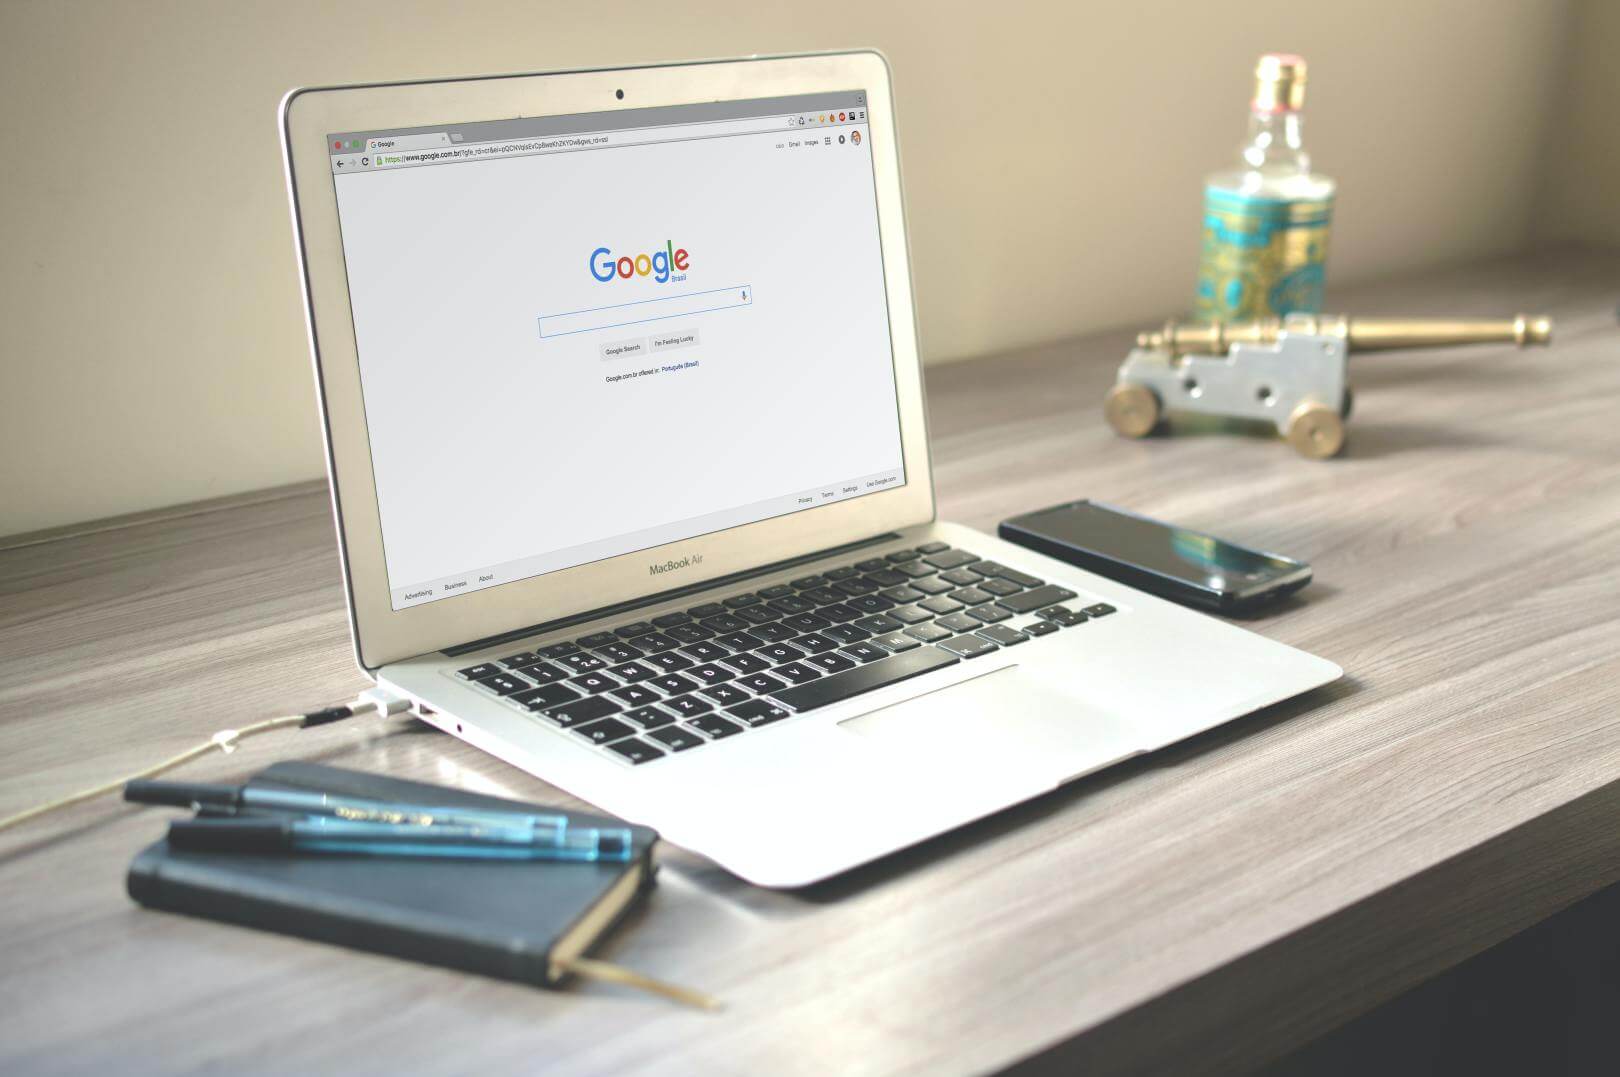 Chrome 原生截长图-根博客 - 专注于网络资源分享与学习的博客网,努力打造全国最优质的免费网络资源分享平台。